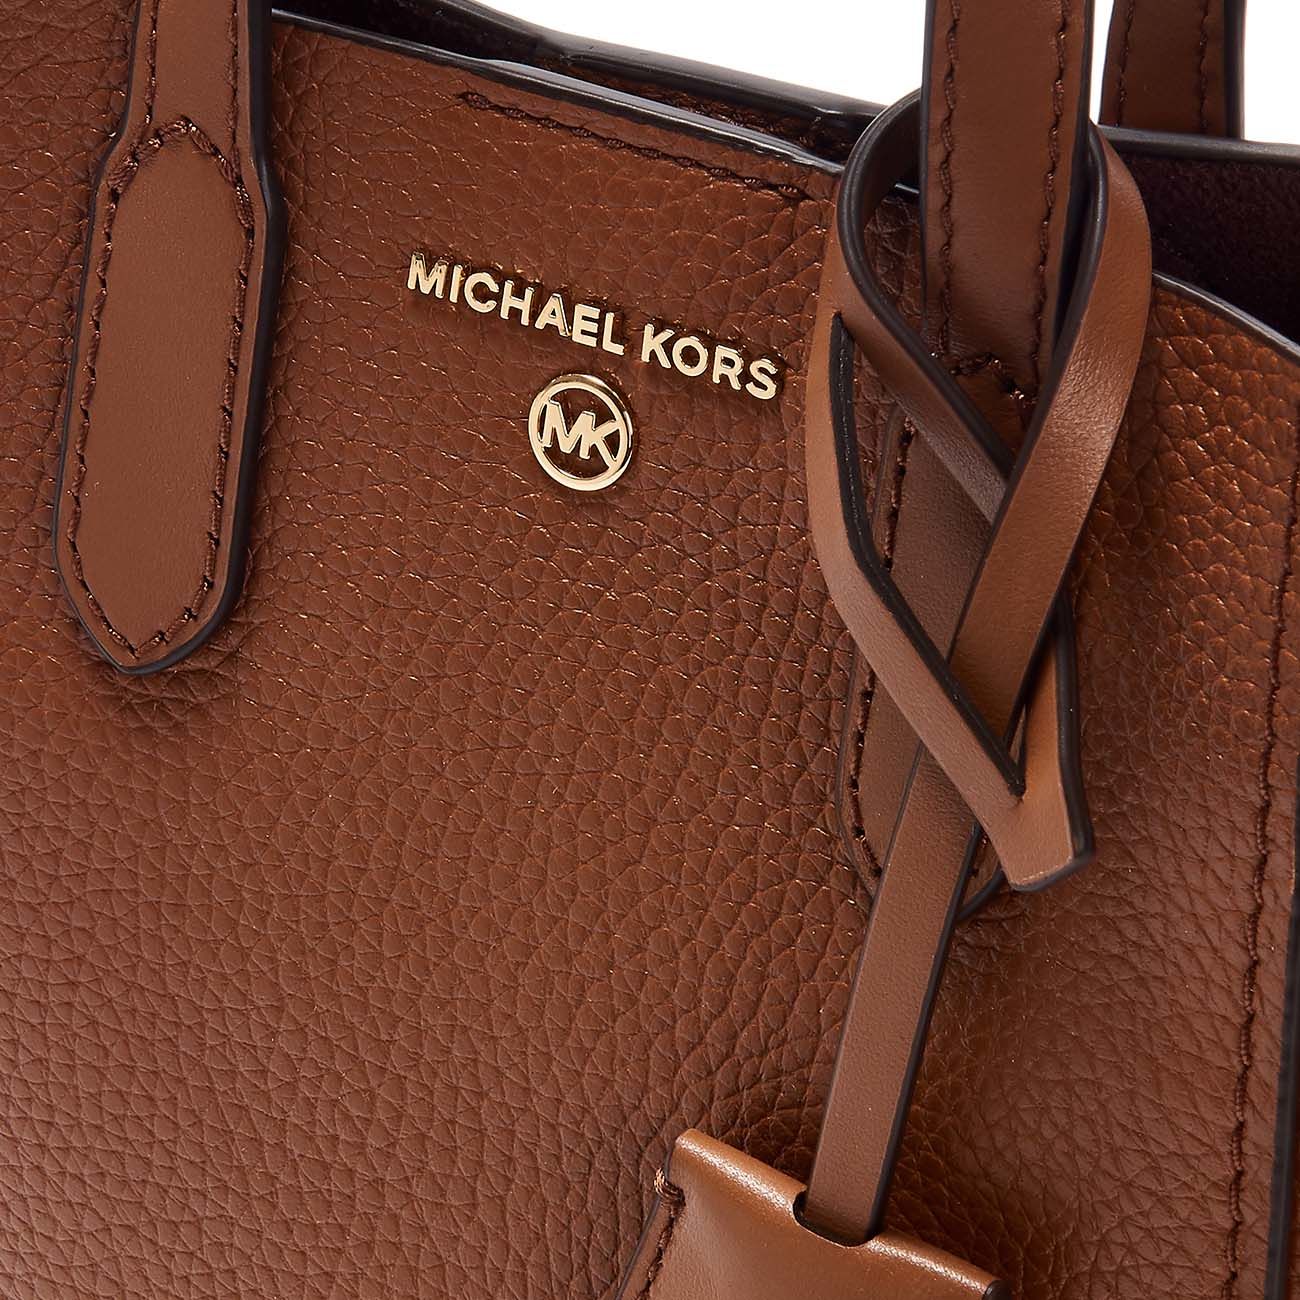 Michael Kors Tote Bag Purse Blush Gold Large Shoulder Bag Shopper Crossbody  NEW